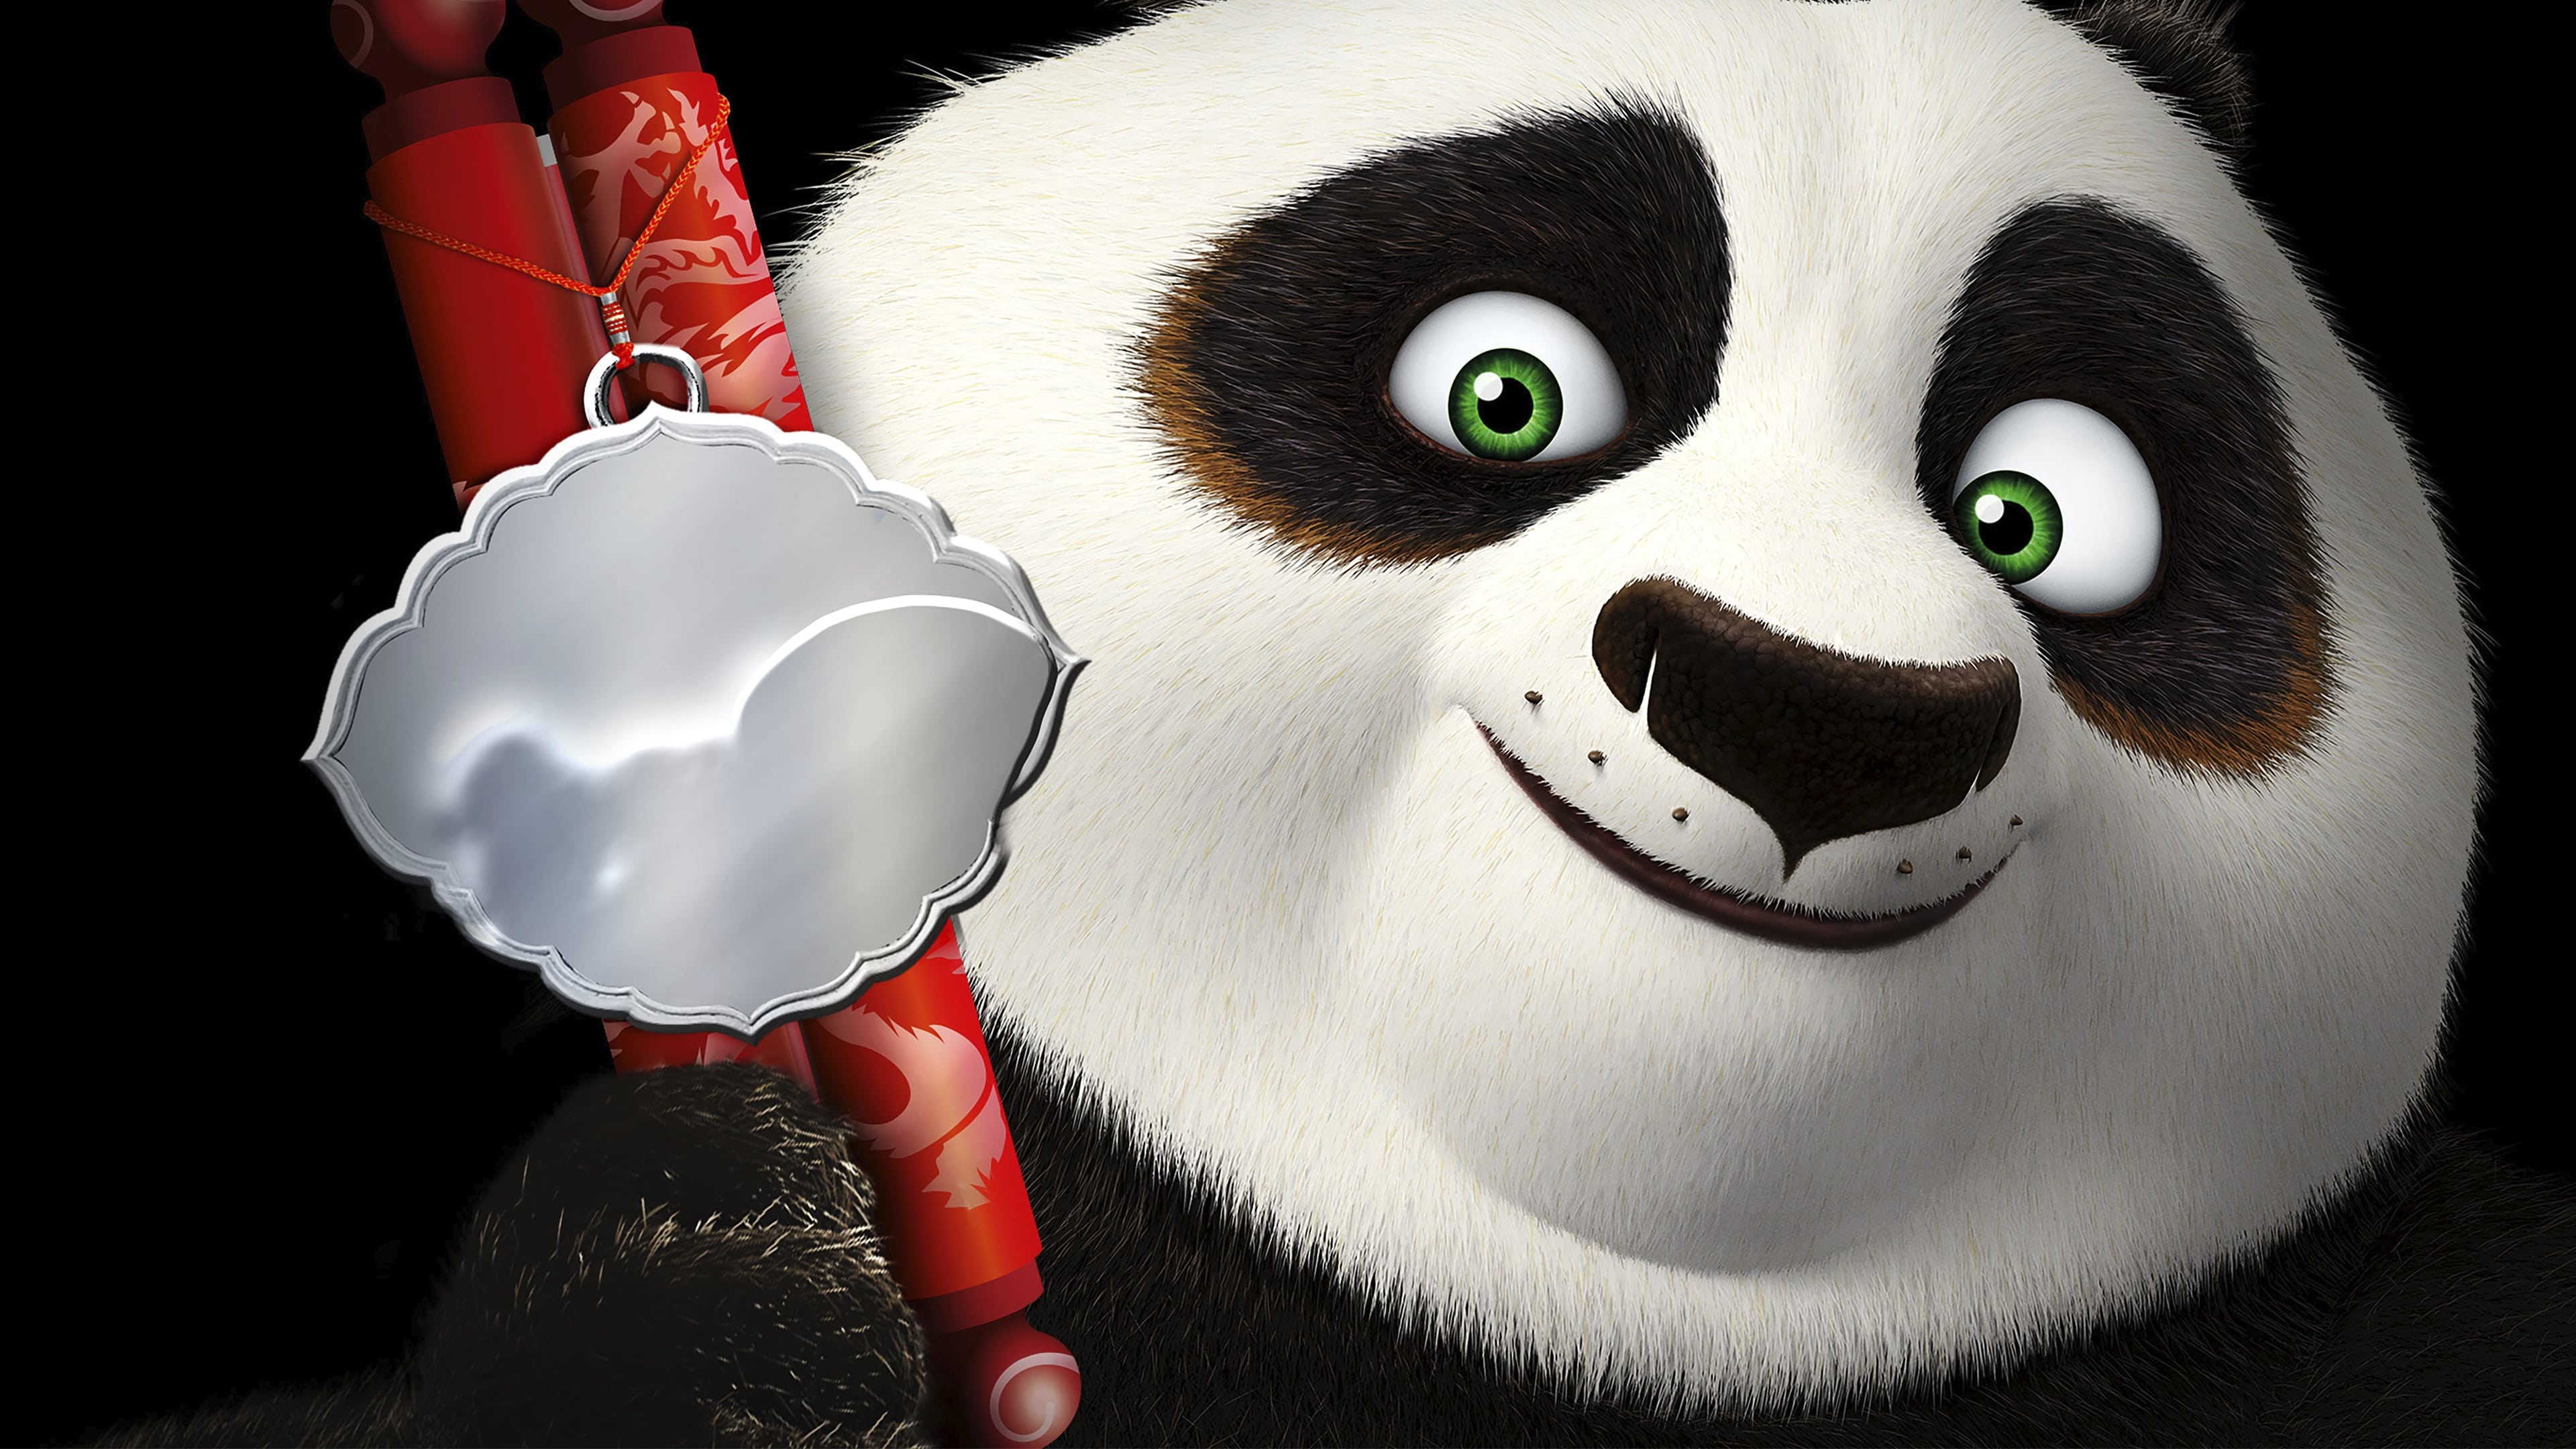 Kung Fu Panda: Secrets of the Scroll (2016)